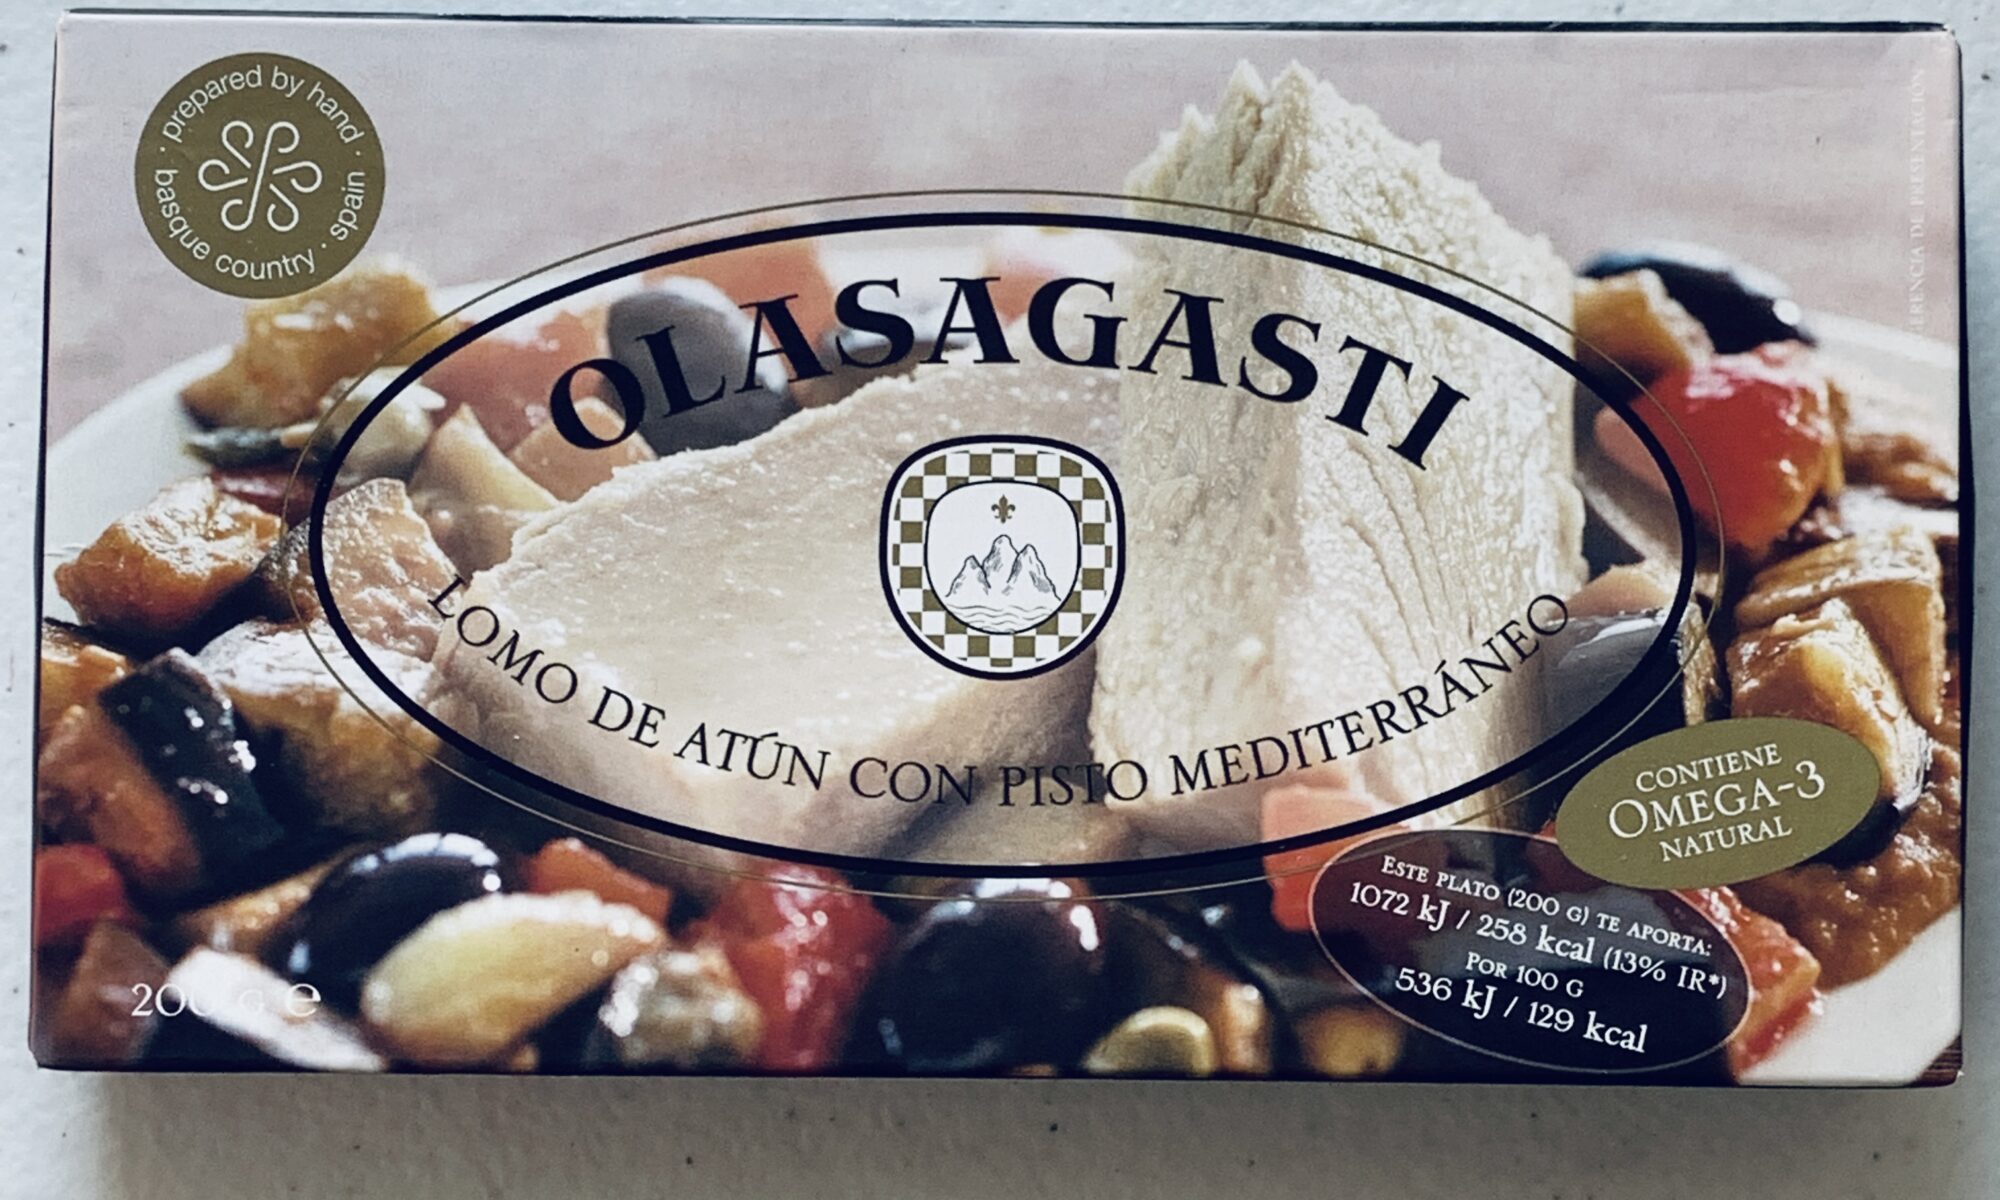 Image of the front of a package of Olasagasti Lomo de atún con pisto mediterráneo (Tuna Fillet with Mediterranean Ratatouille (Pisto))